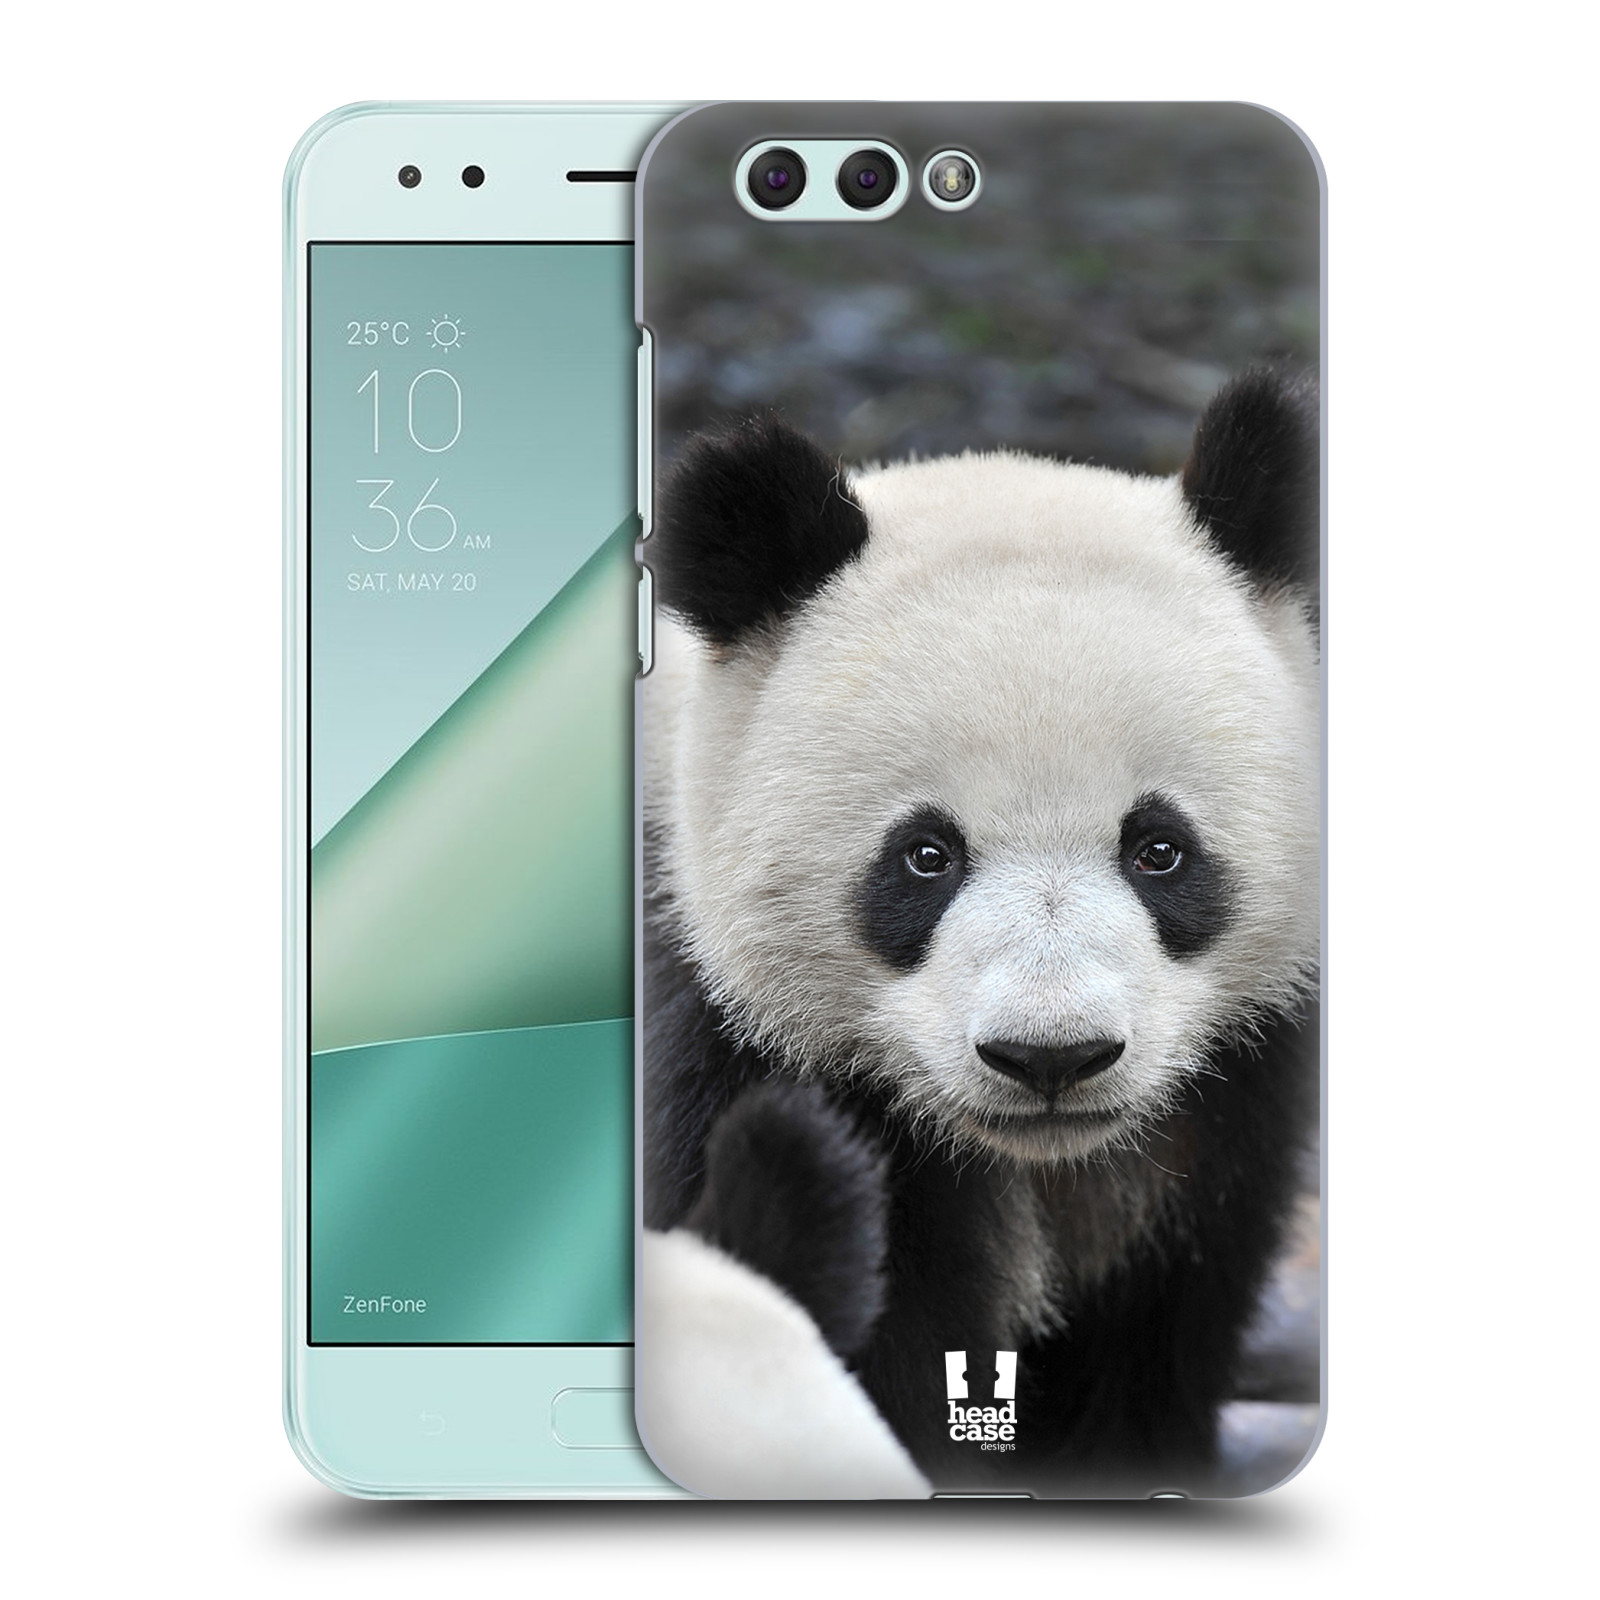 HEAD CASE plastový obal na mobil Asus Zenfone 4 ZE554KL vzor Divočina, Divoký život a zvířata foto MEDVĚD PANDA